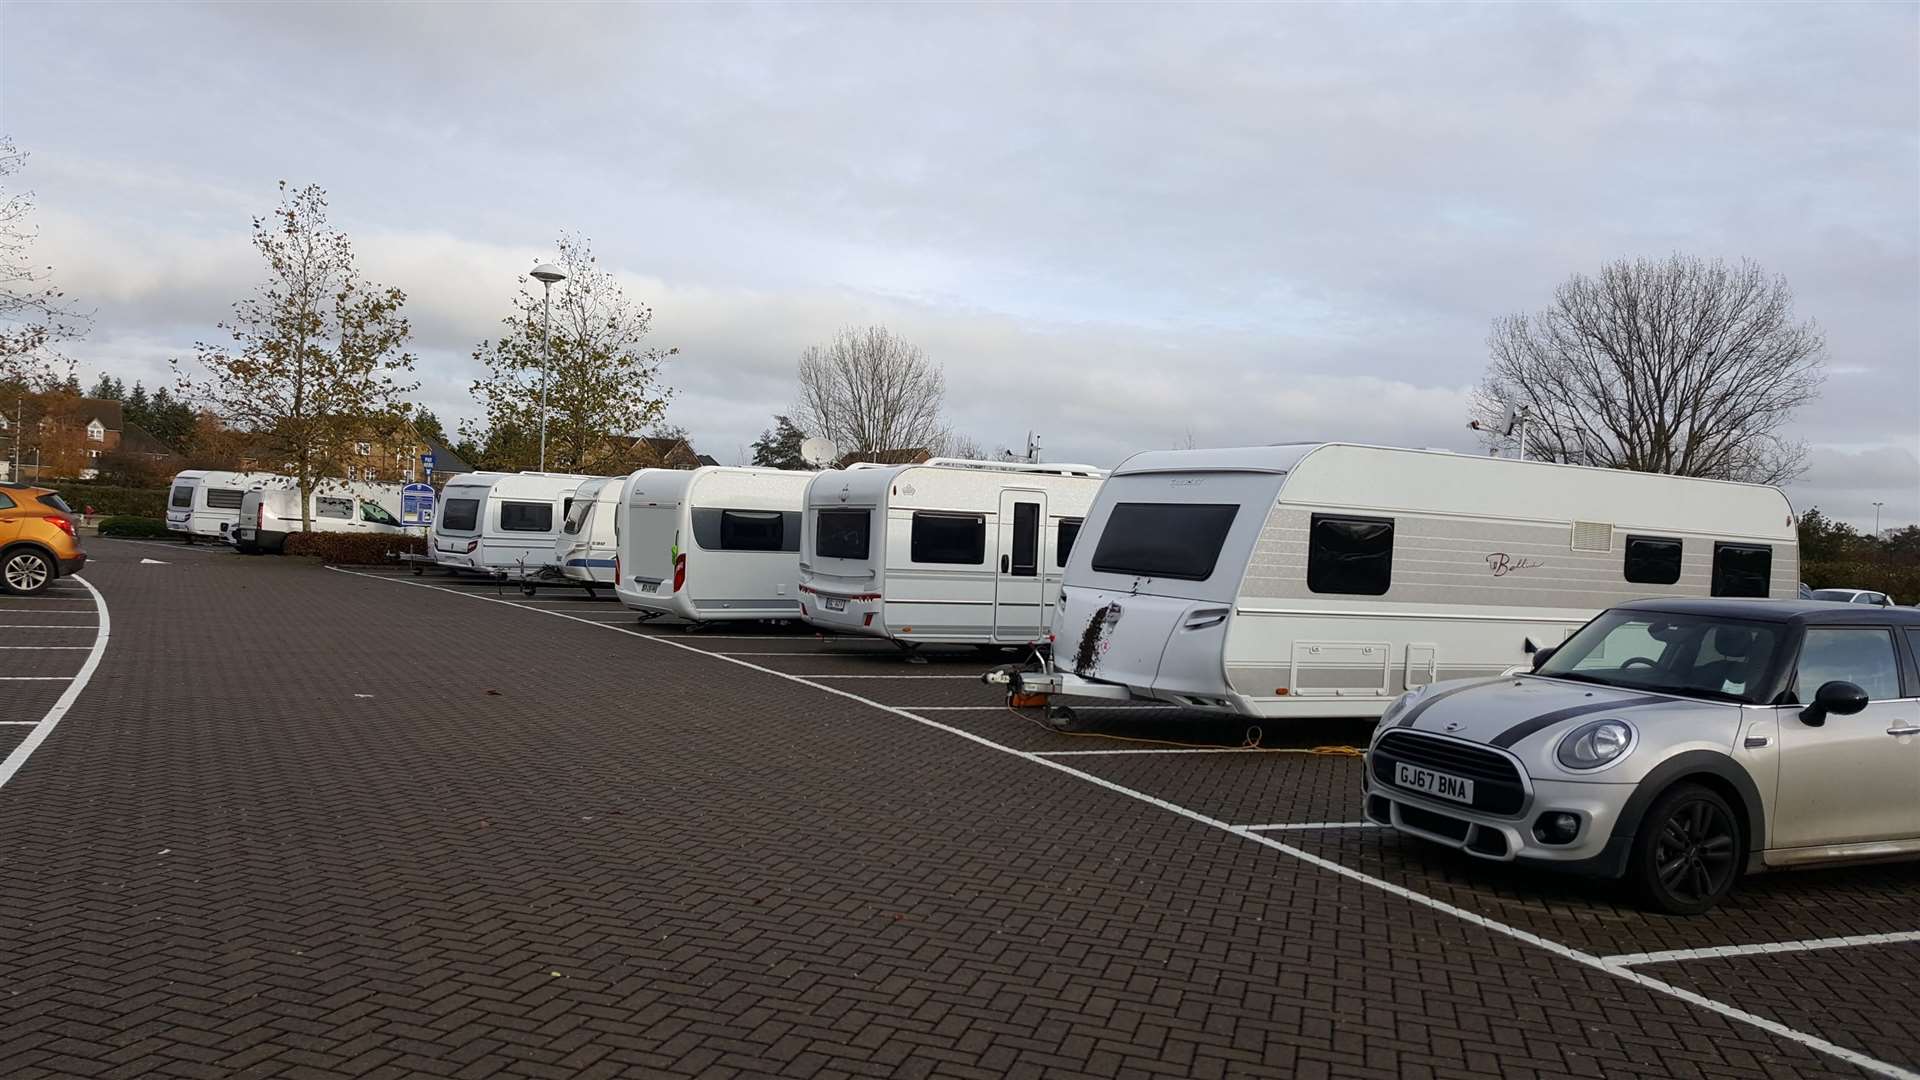 Travellers were set up in Ashford's Stour Centre car park